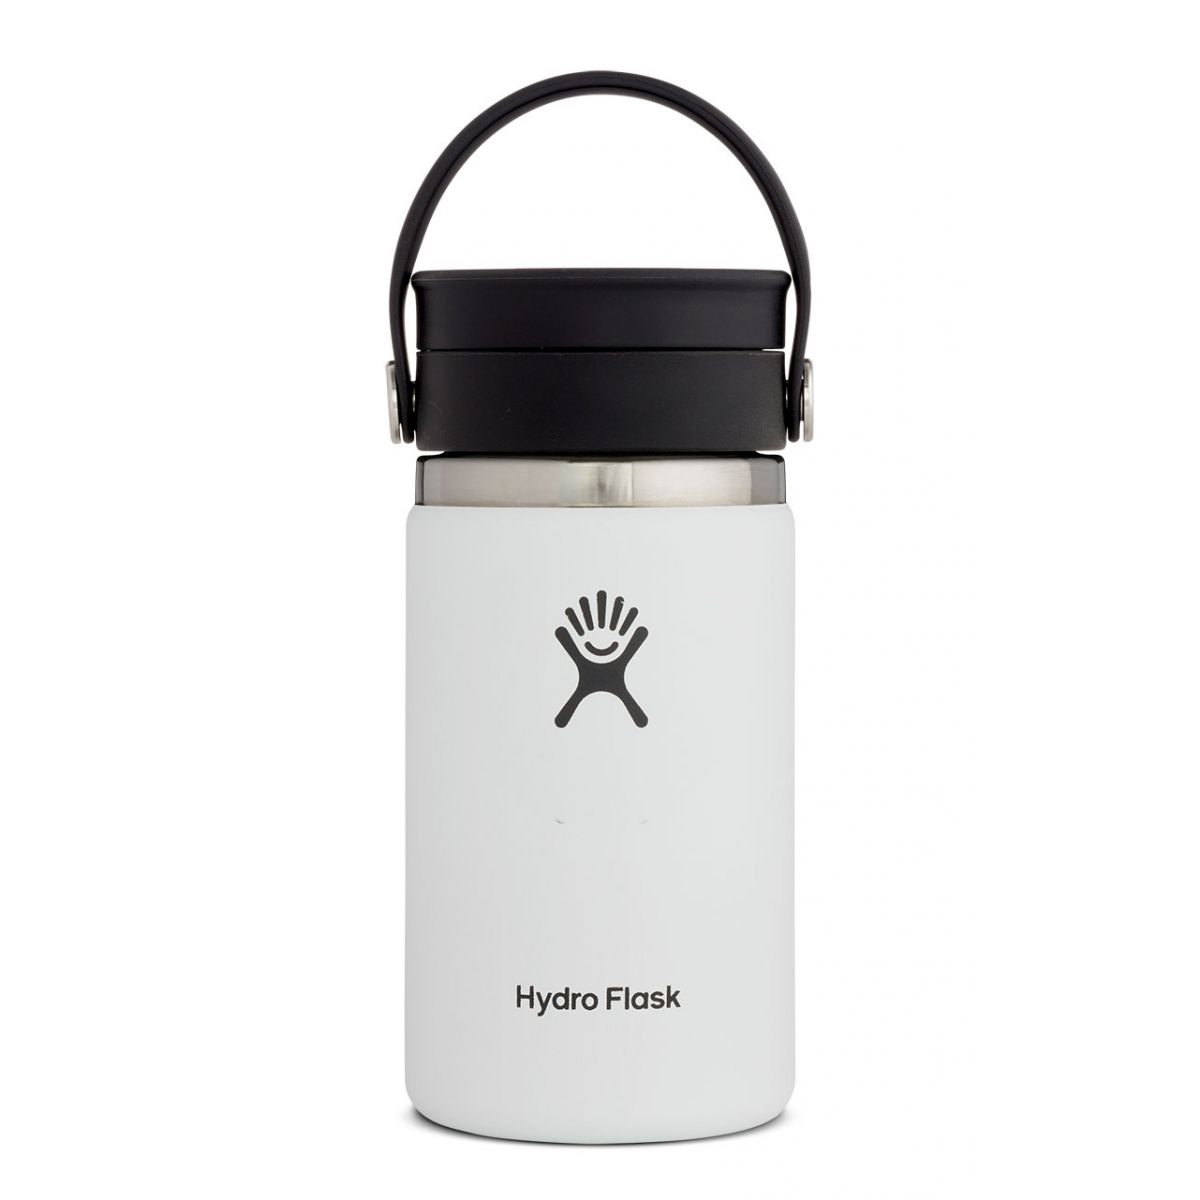 Hydro Flask 12 oz Coffee Mug (Eggplant)